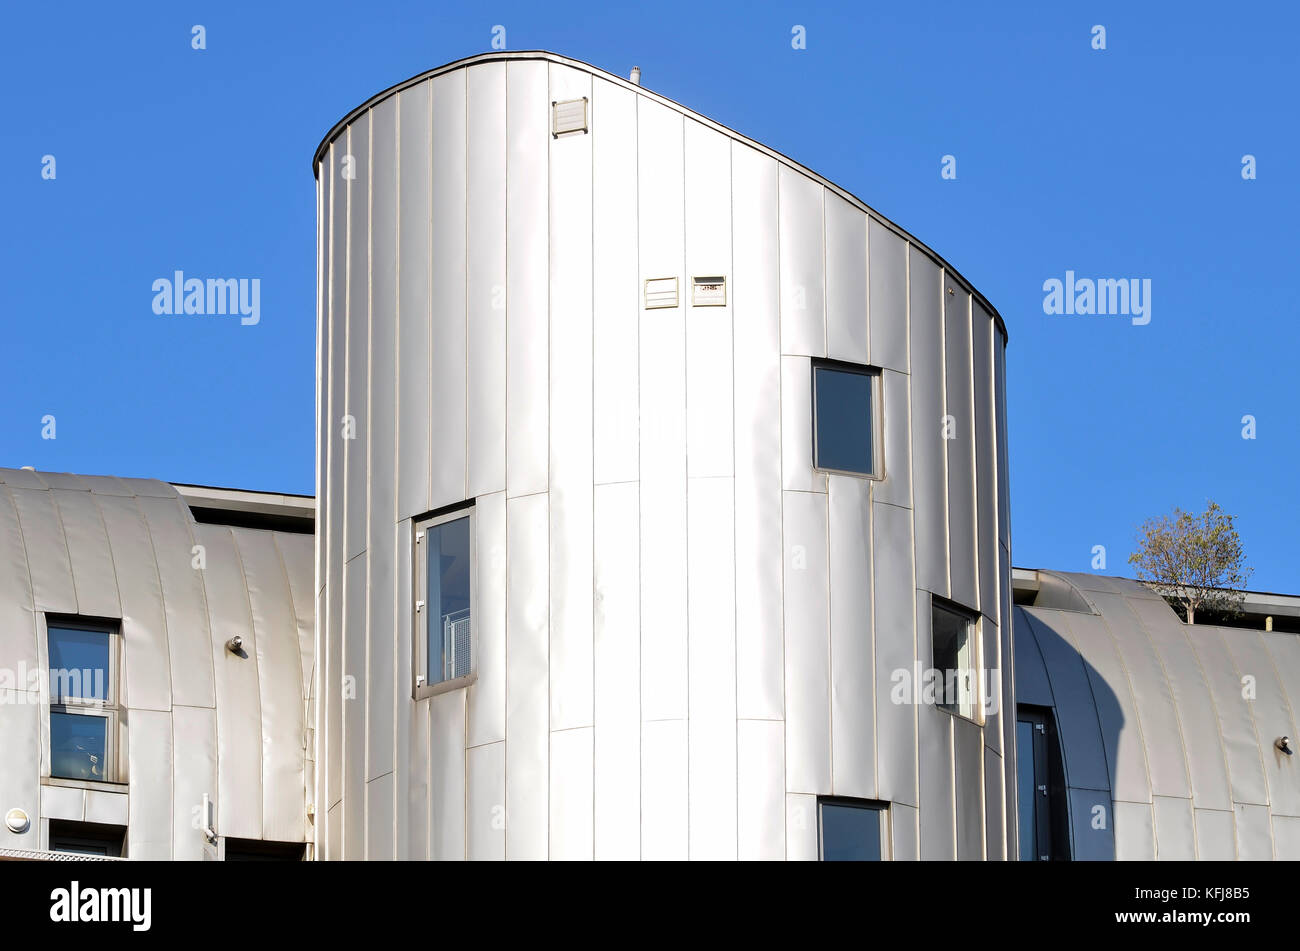 Aluminium cladding on buildings, Castle Yard, London, SE1, UK. Stock Photo